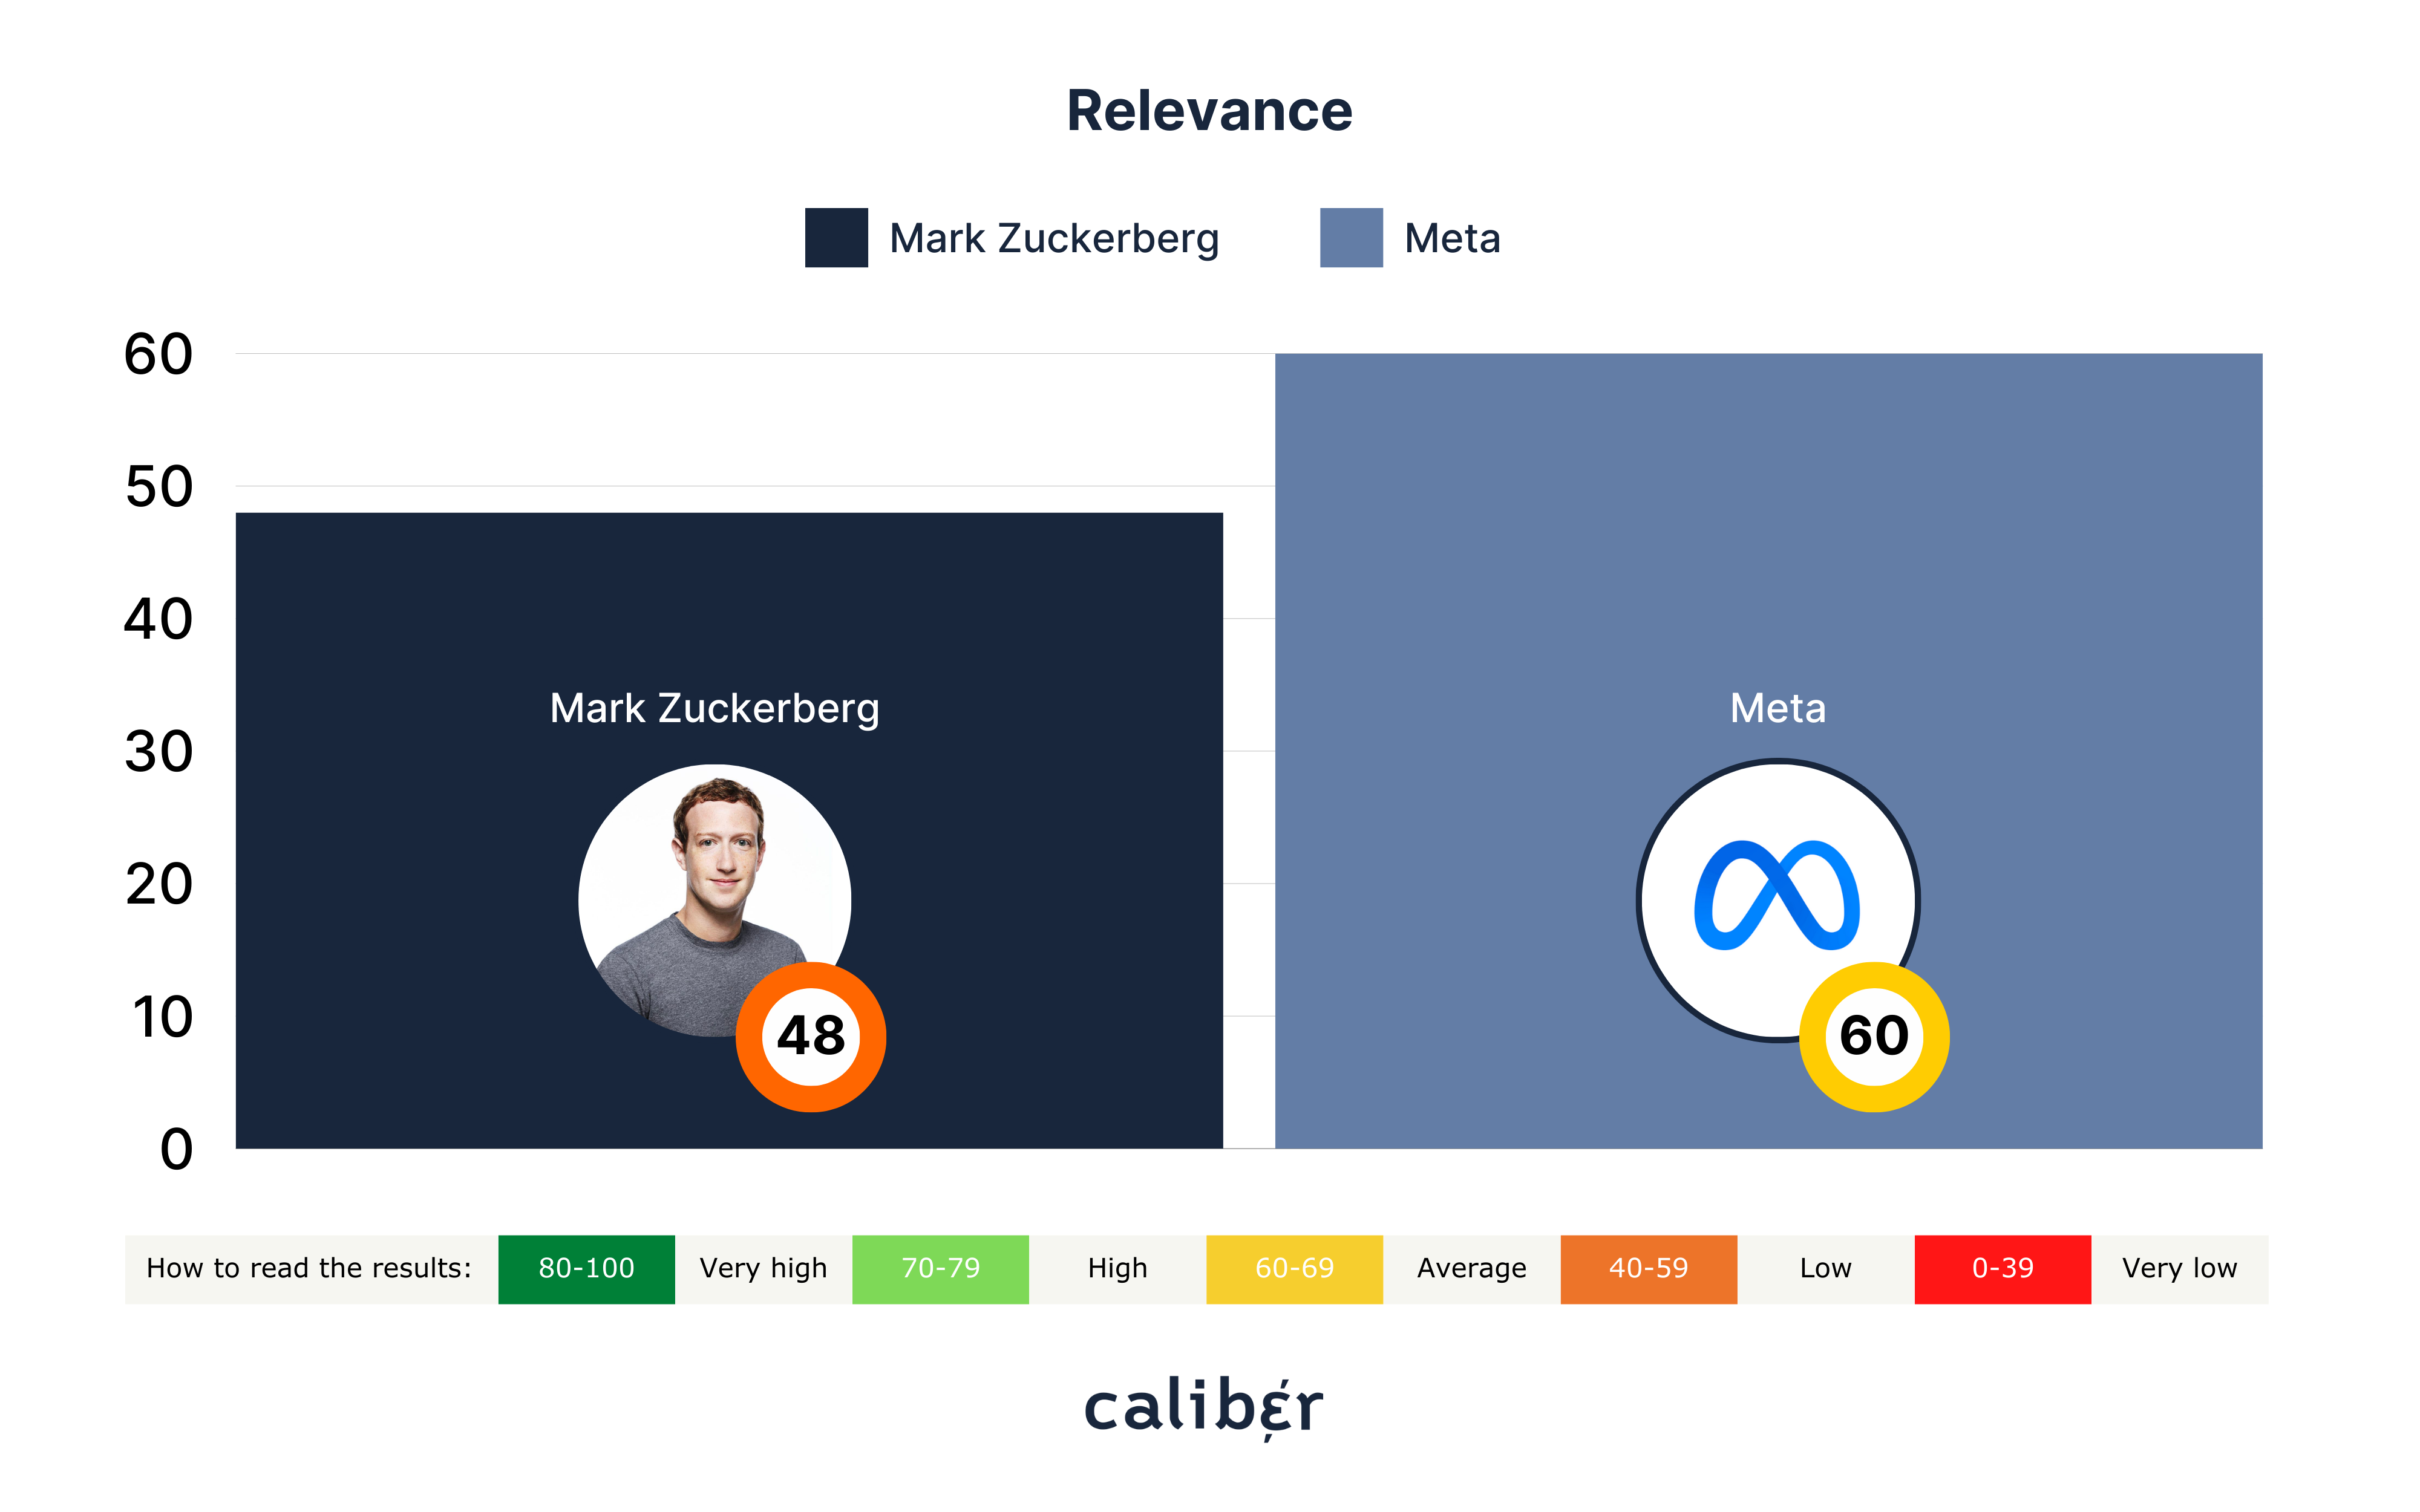 Mark Zuckerberg Relevance Score